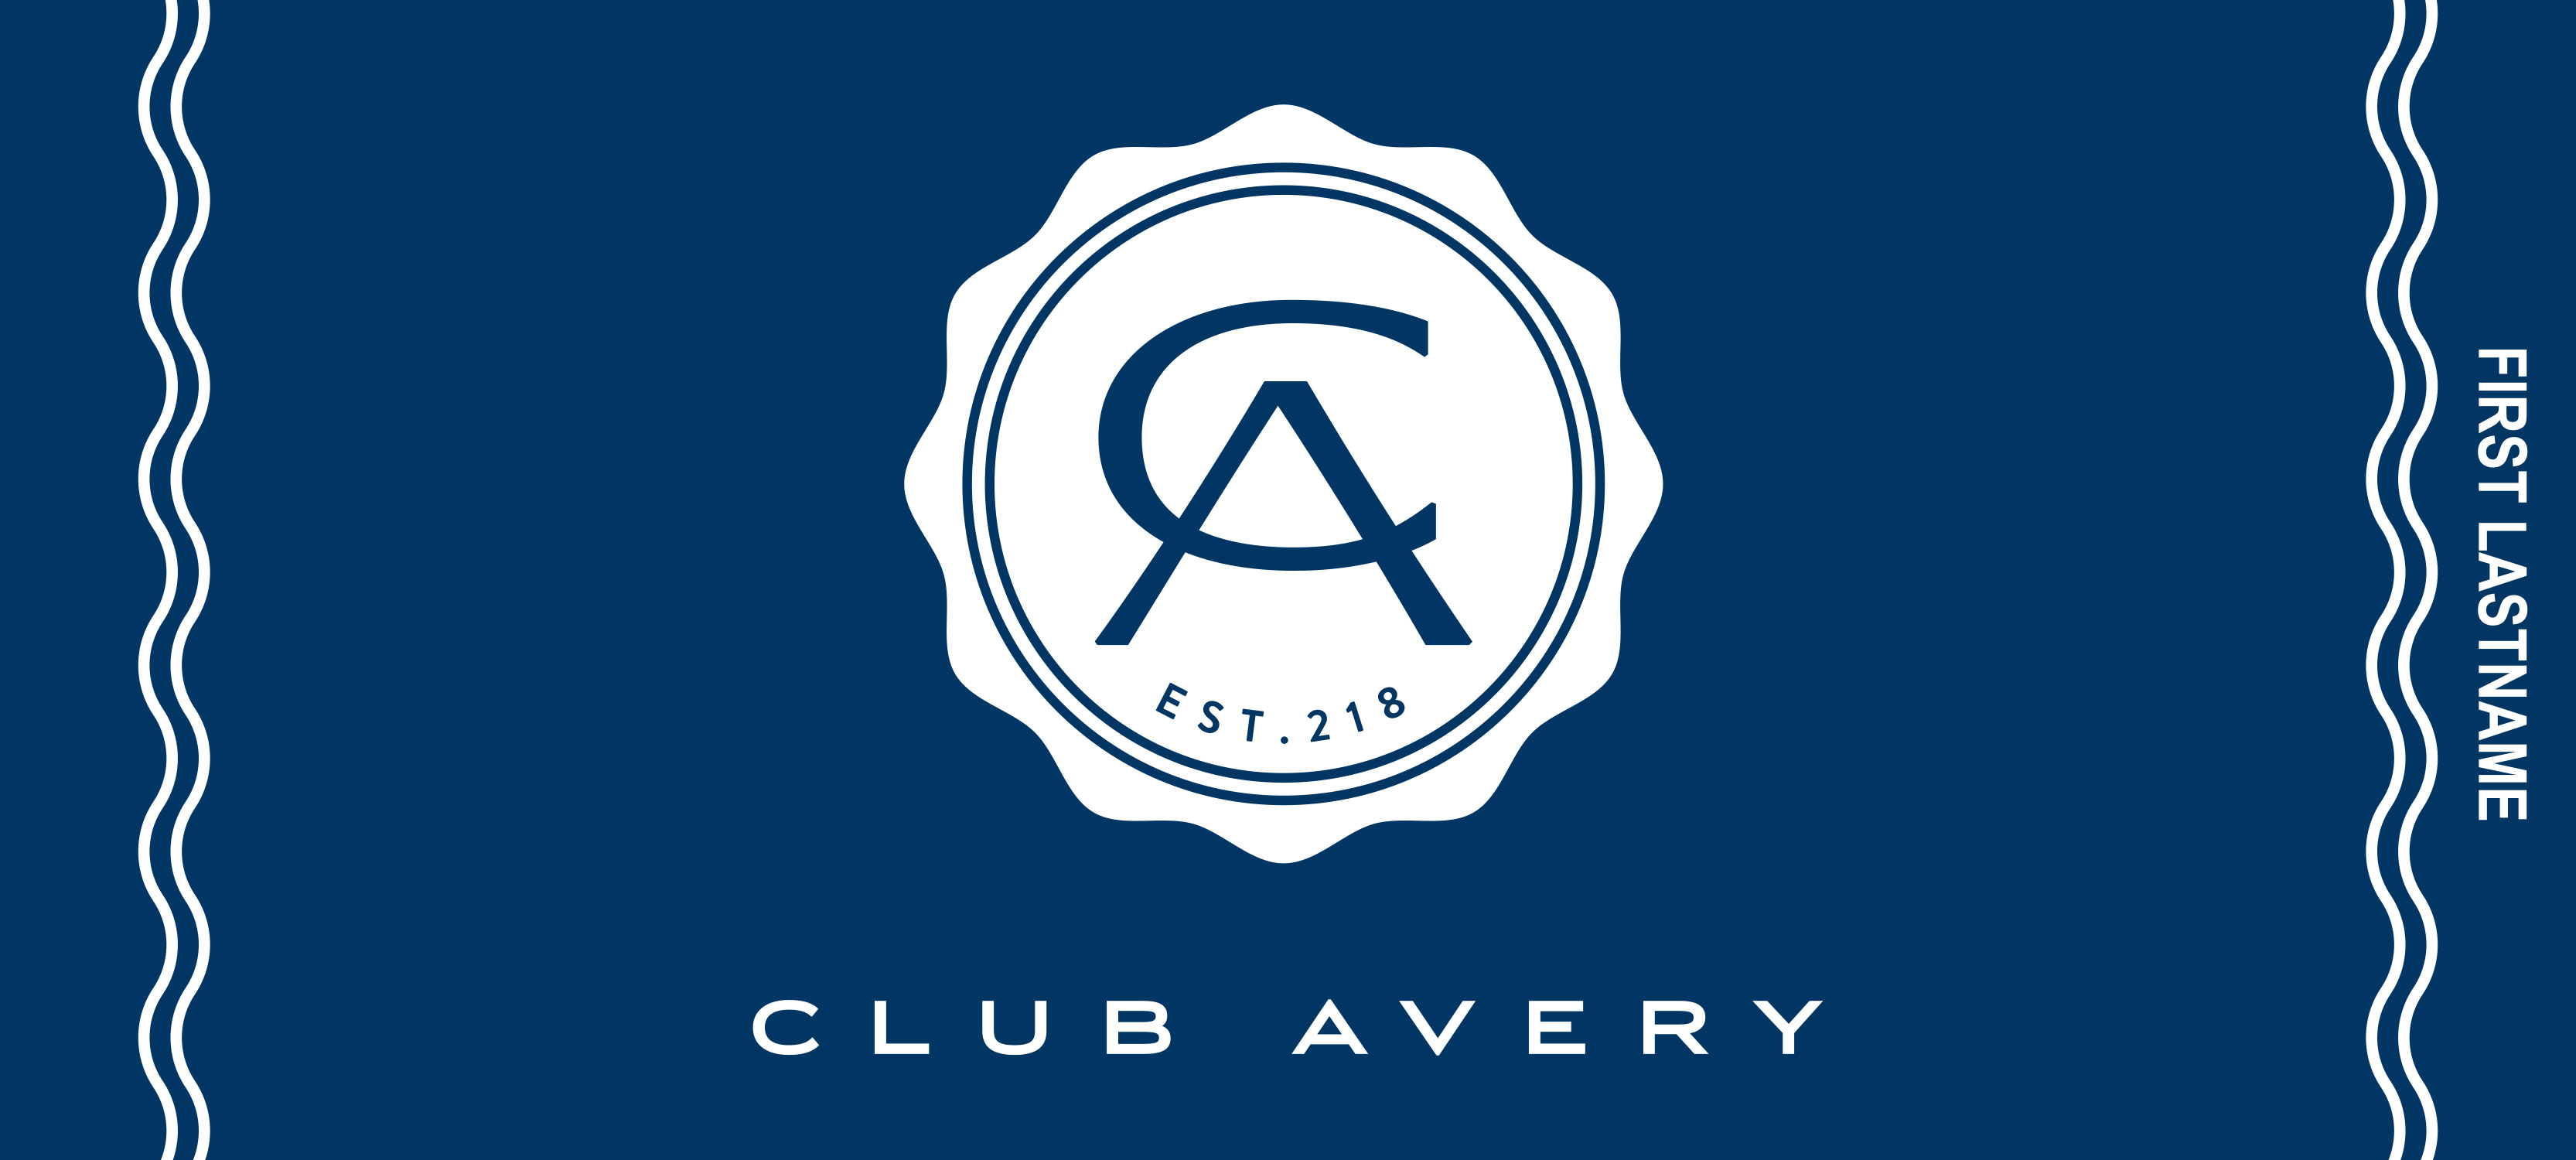 00285 - Club Avery 30x70 V2 - PROOF